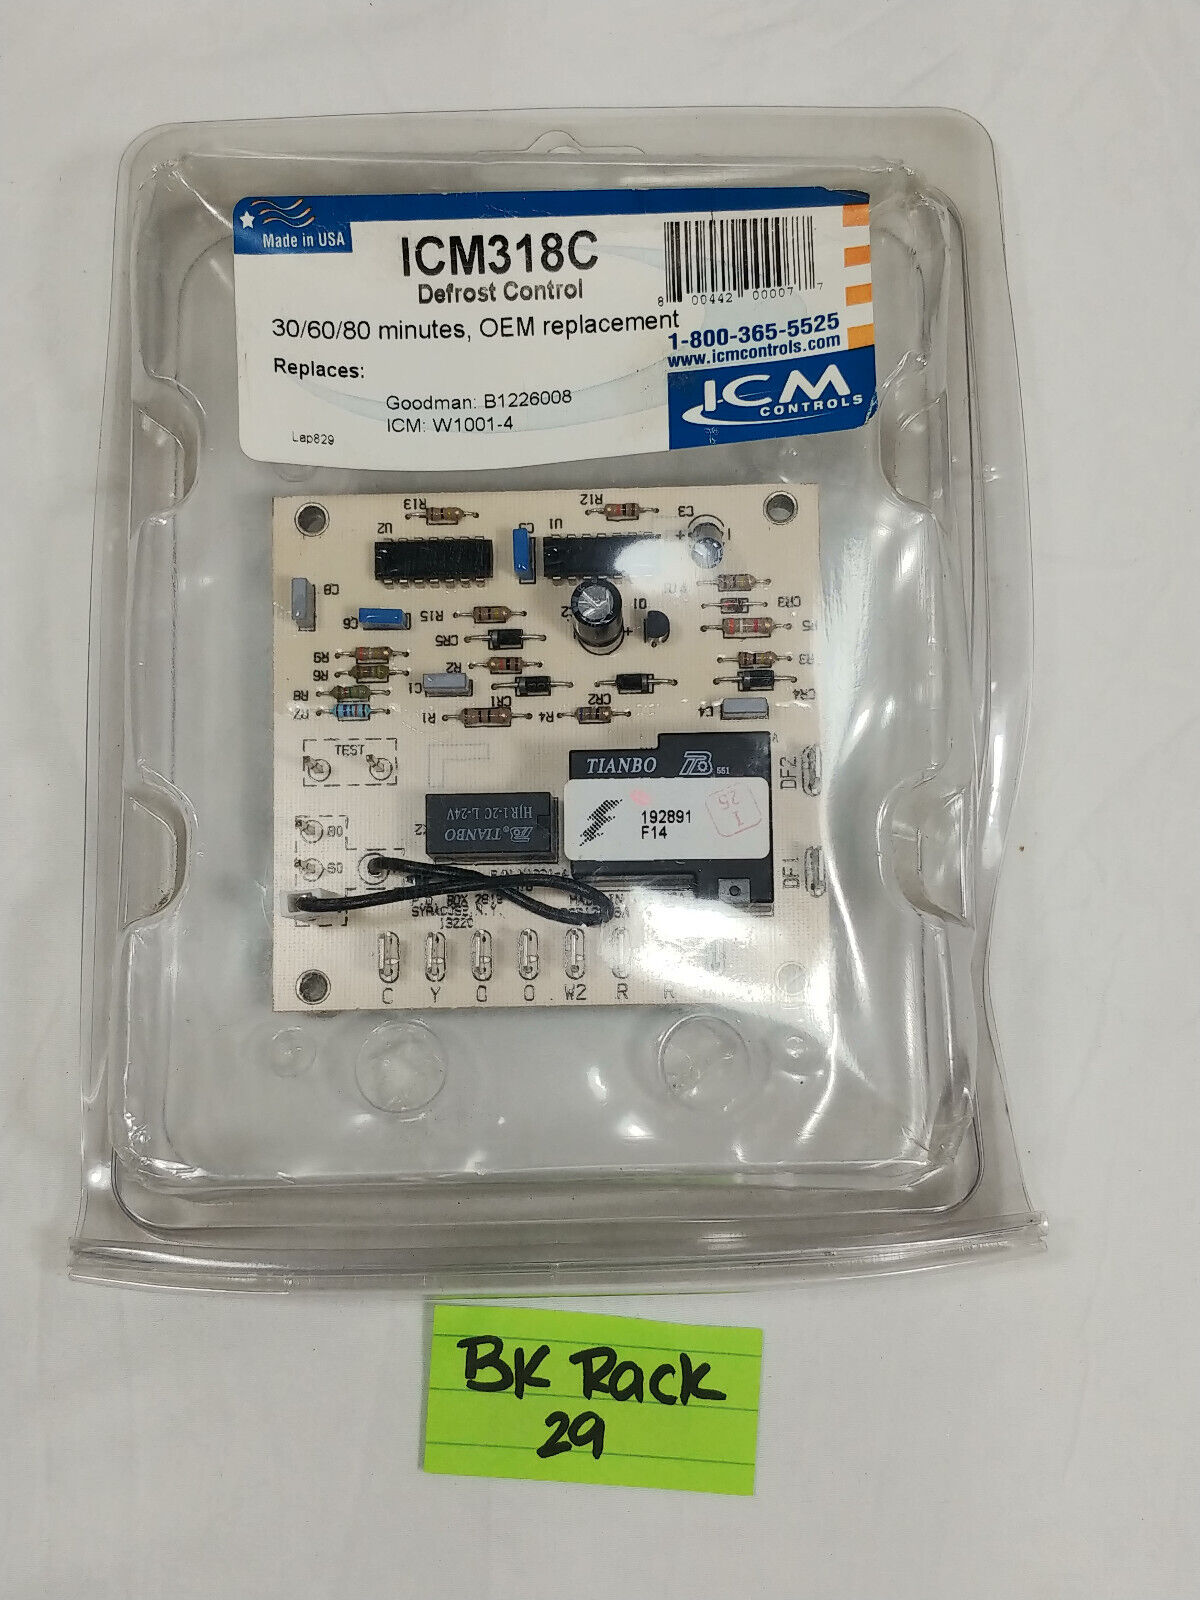 ICM318C 30/60/80 Heat Pump Defrost Control Circuit Board B1226008 W1001-4